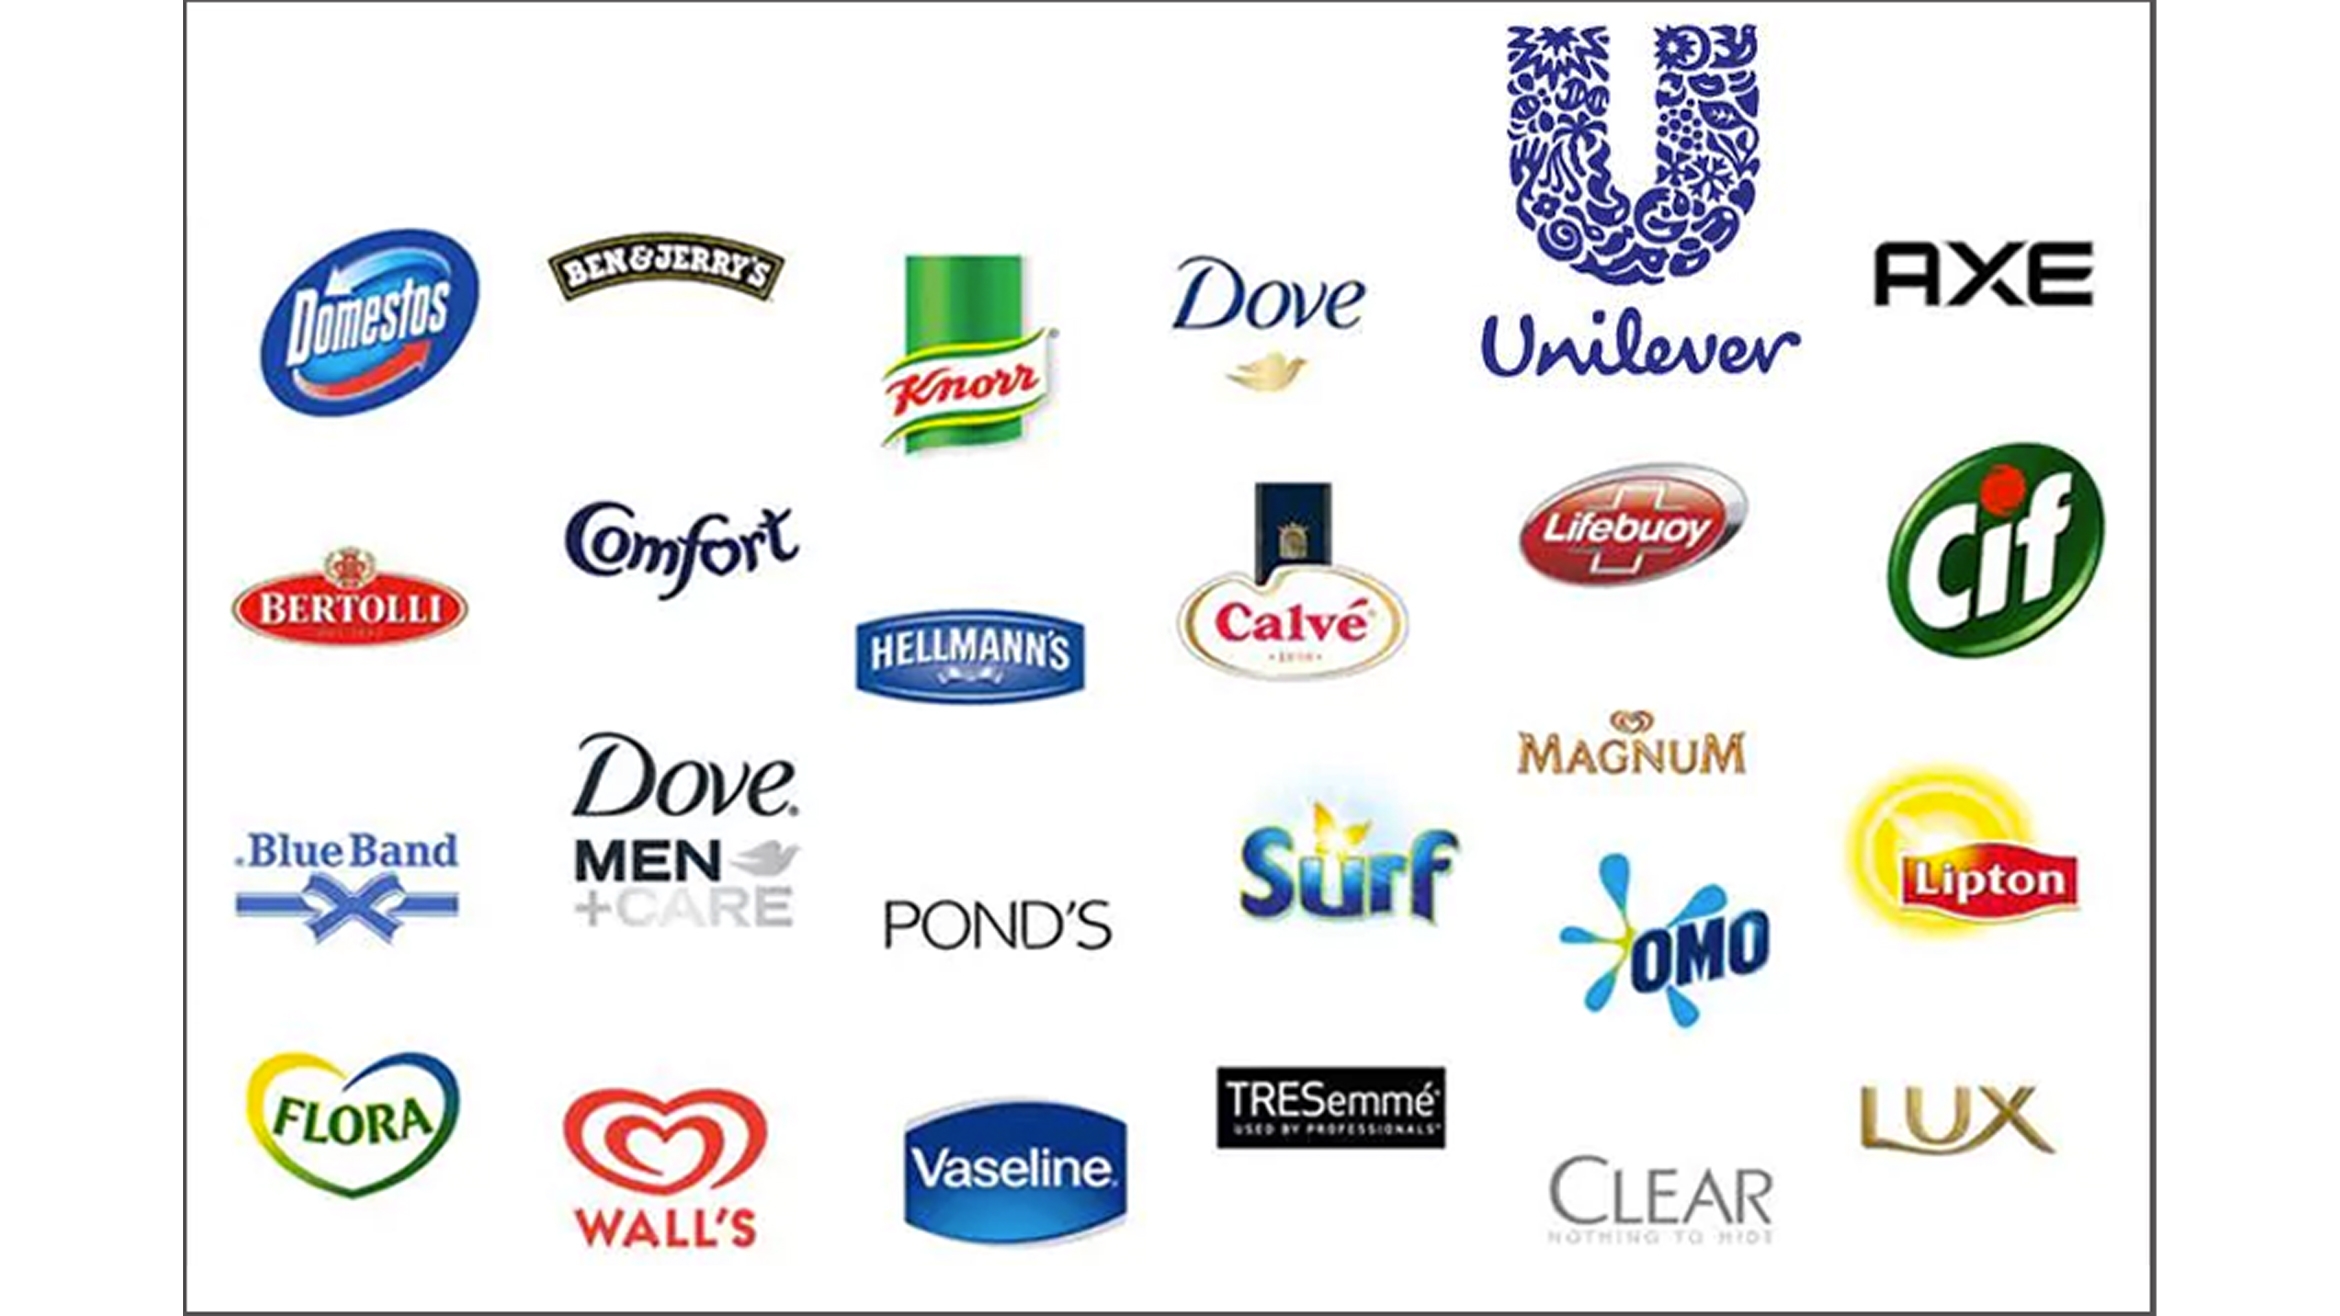 Unilever mit großem Markenrepertoire – 